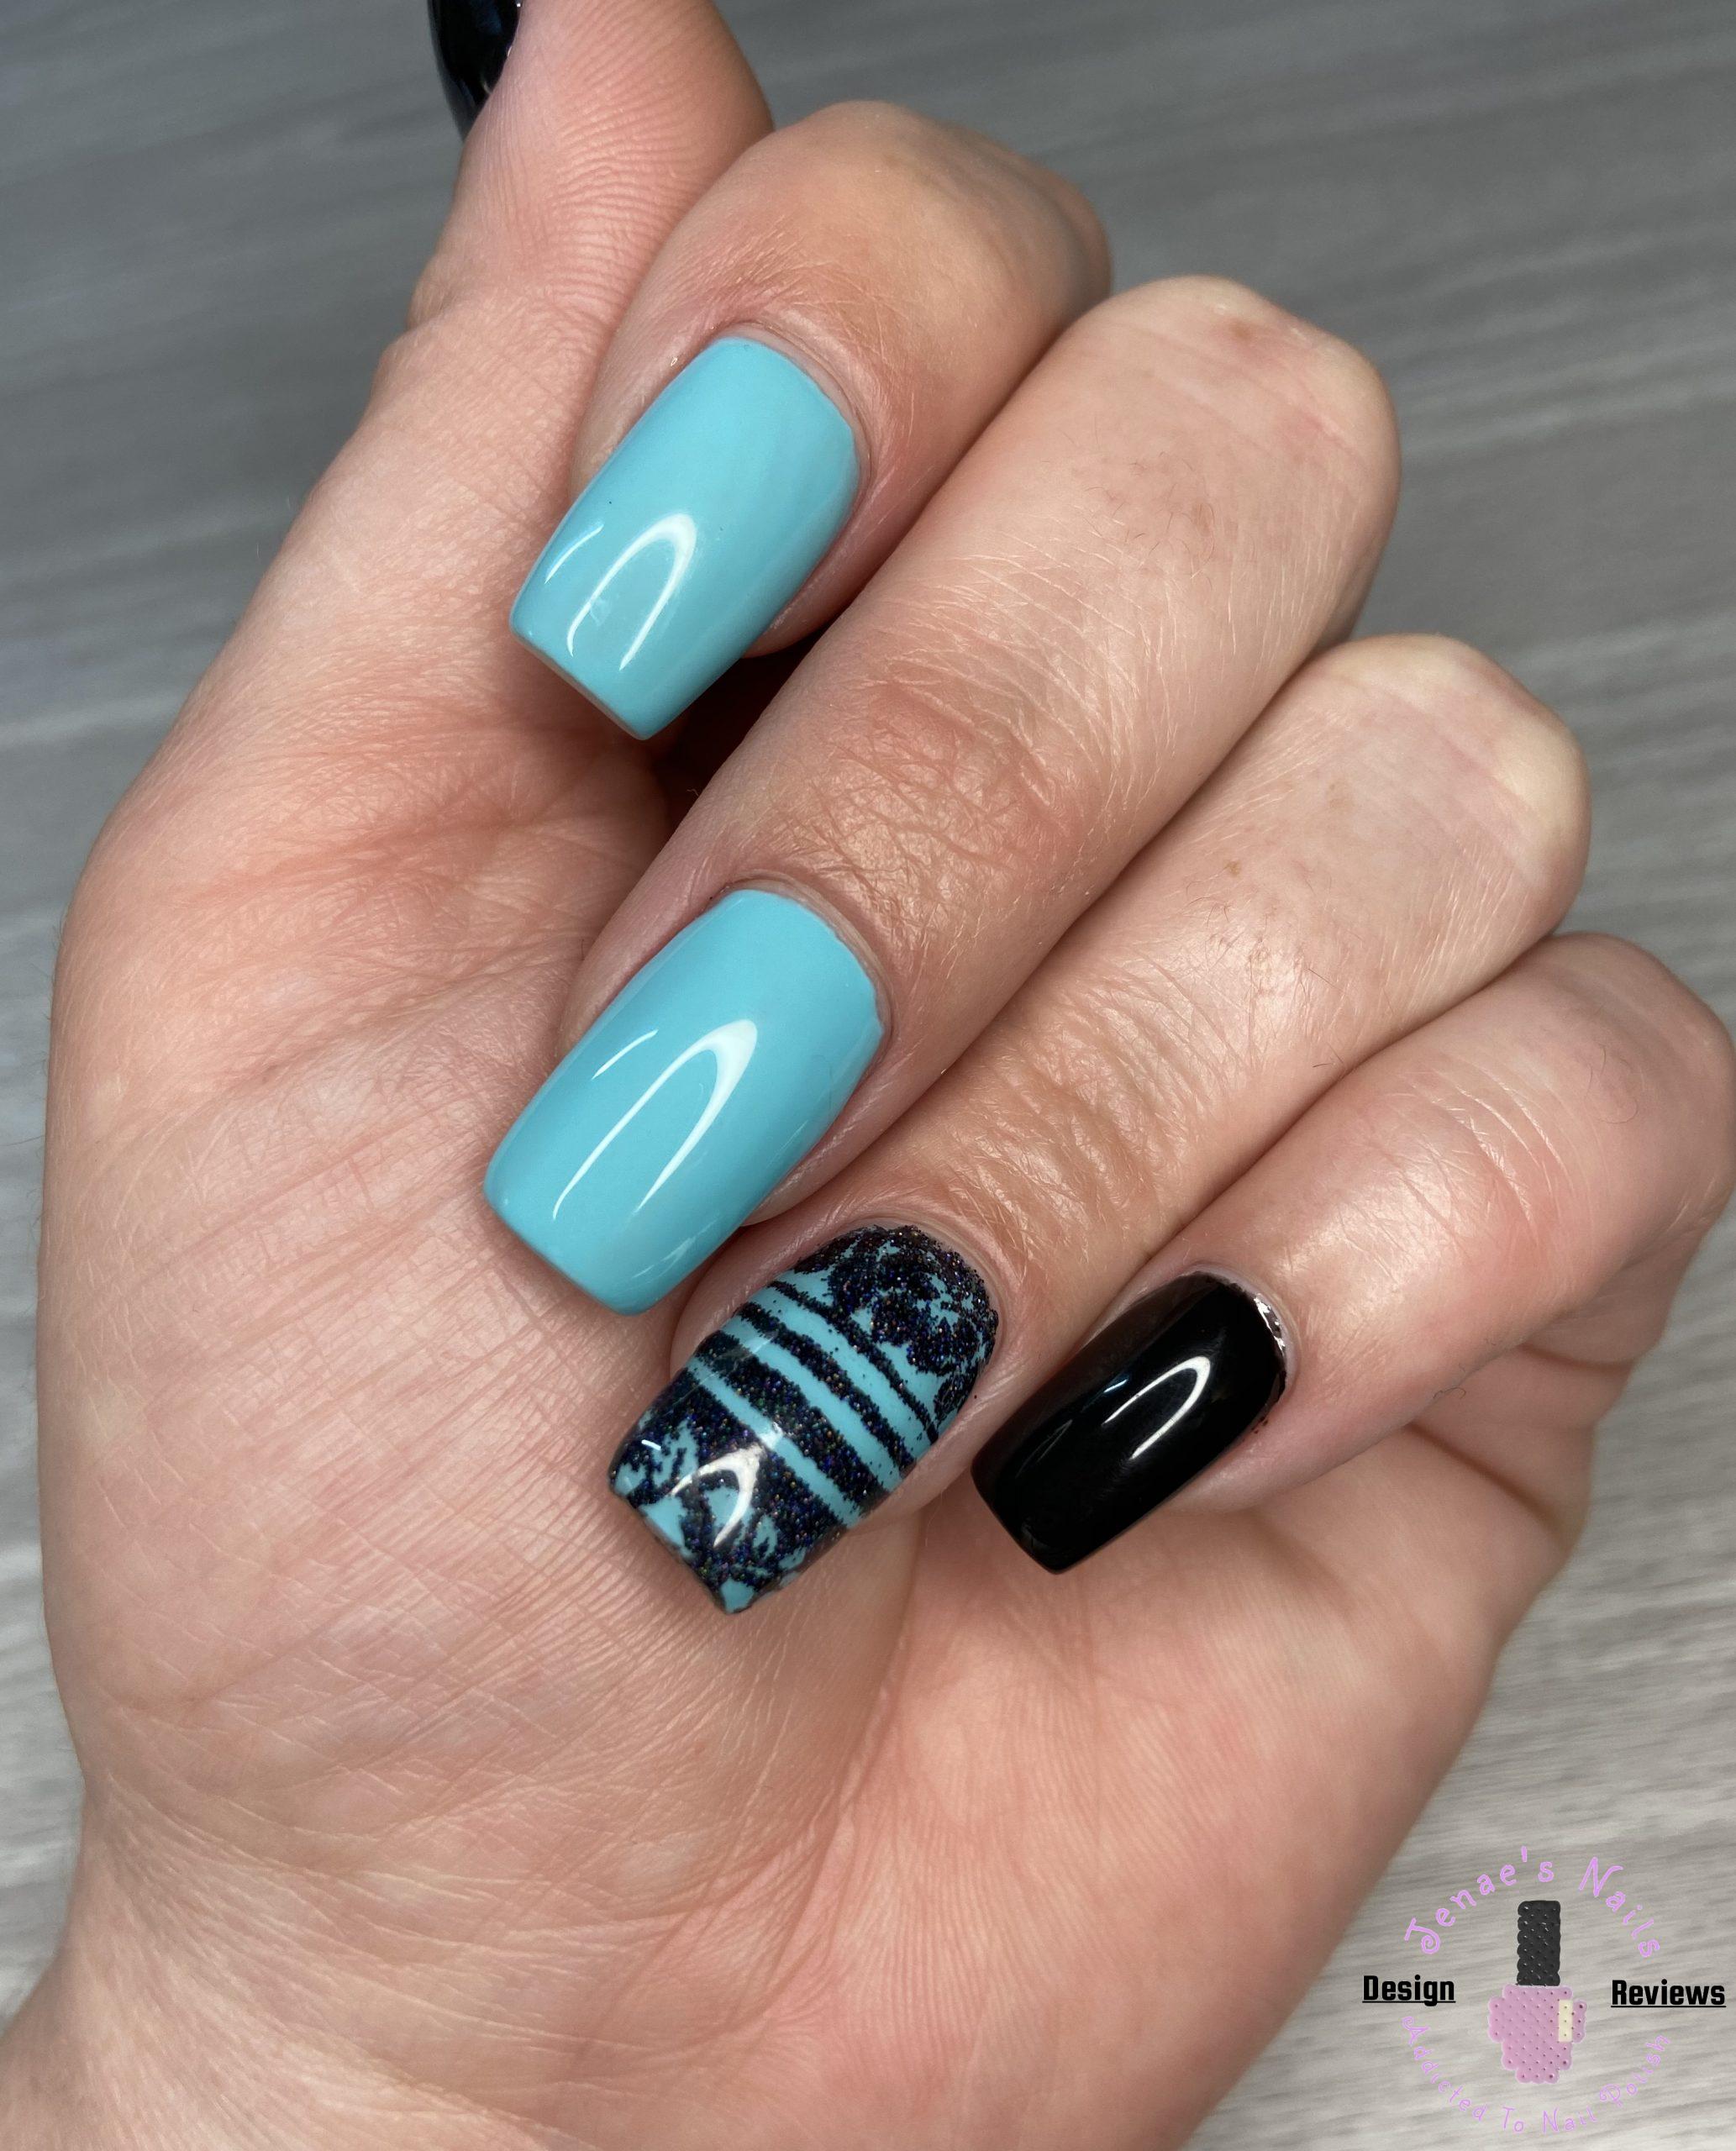 Black and turquoise nails - The Best Images | BestArtNails.com